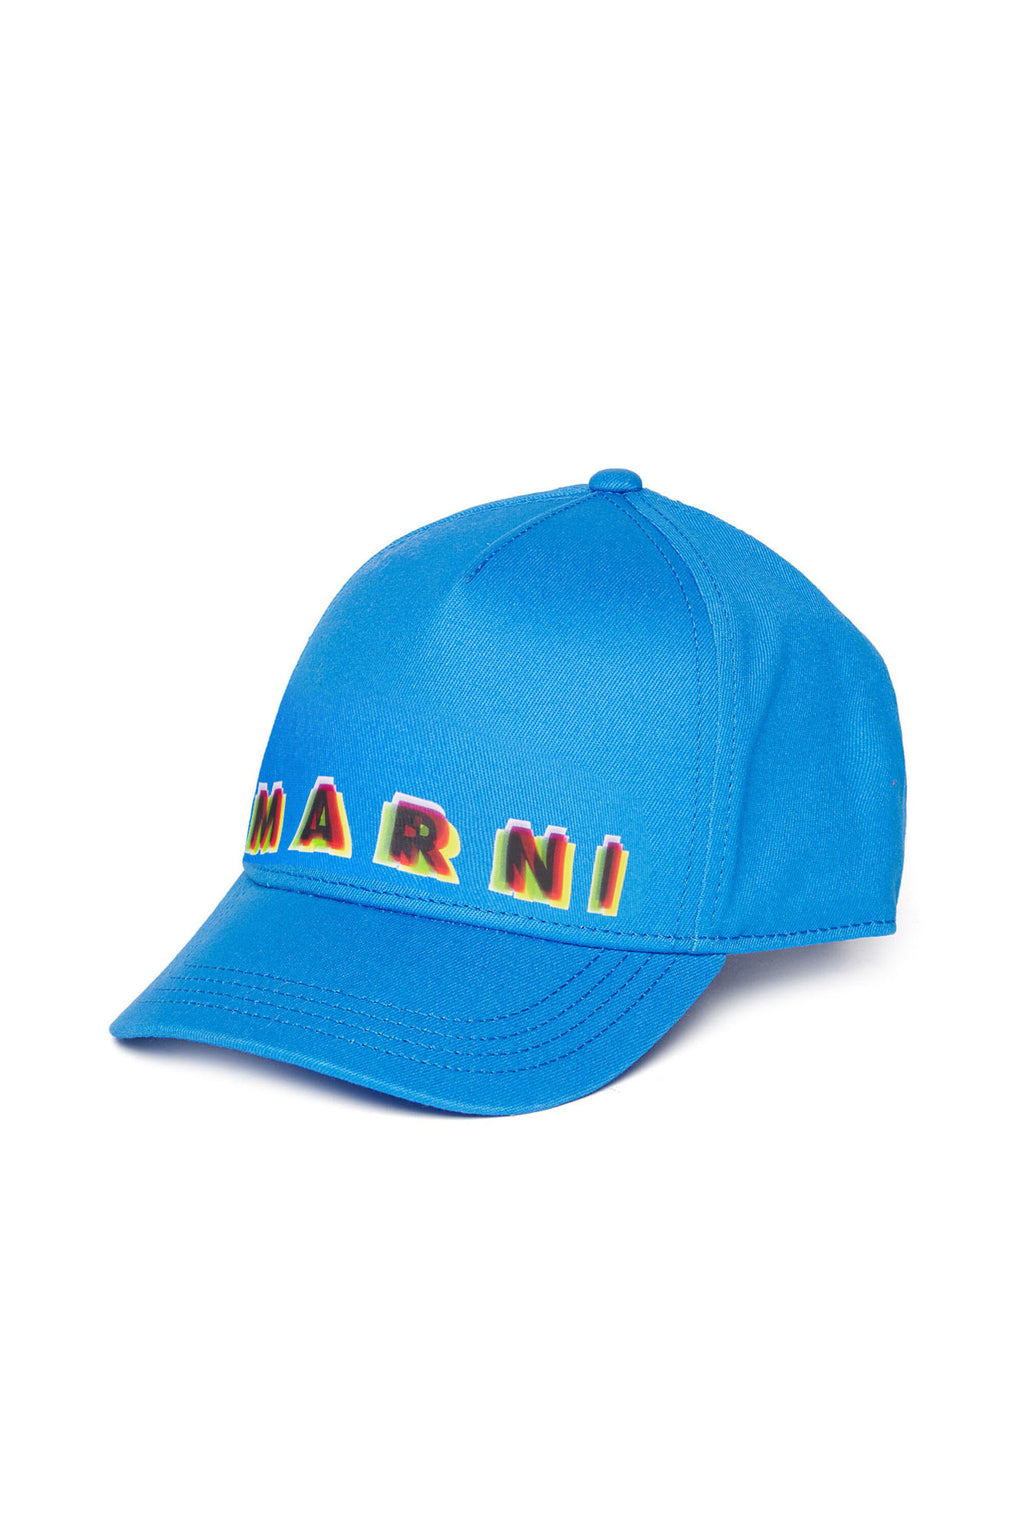 Baseball cap with Rainbow logo